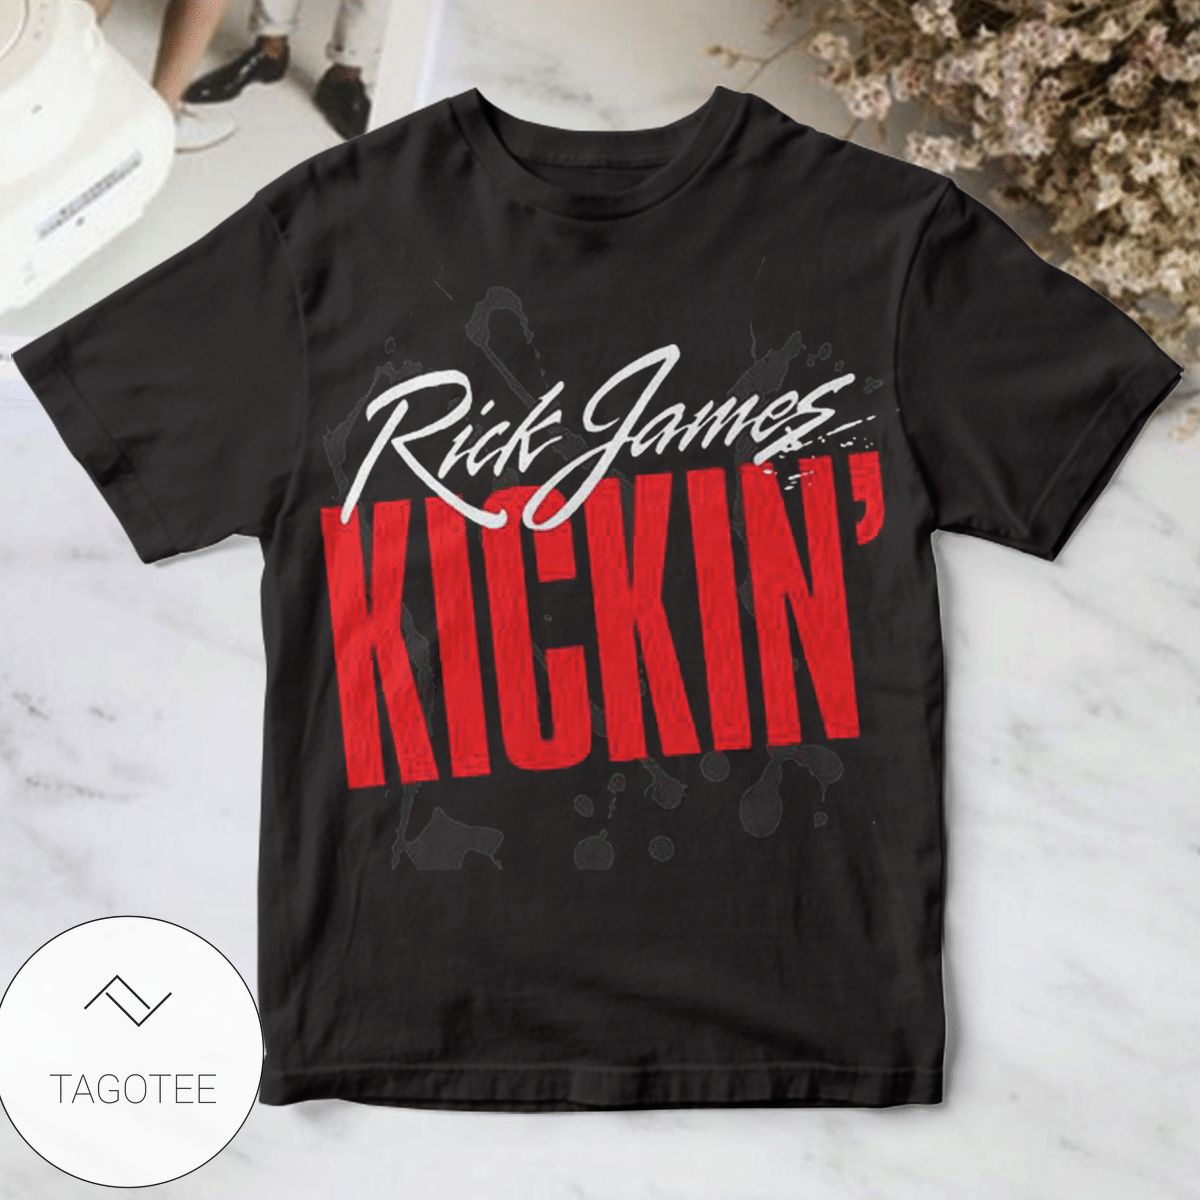 Rick James Kickin' Album Cover Shirt